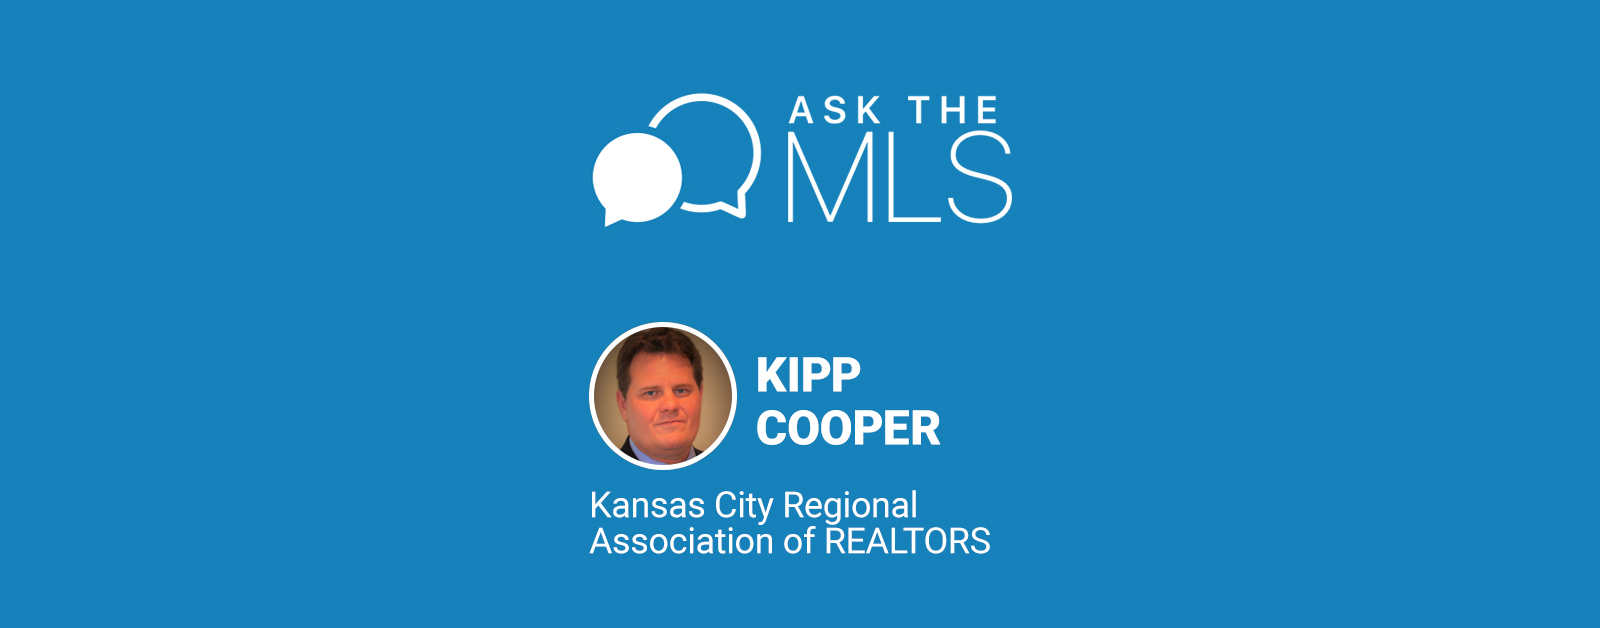 Ask the MLS: Meet Kipp Cooper of KCRAR